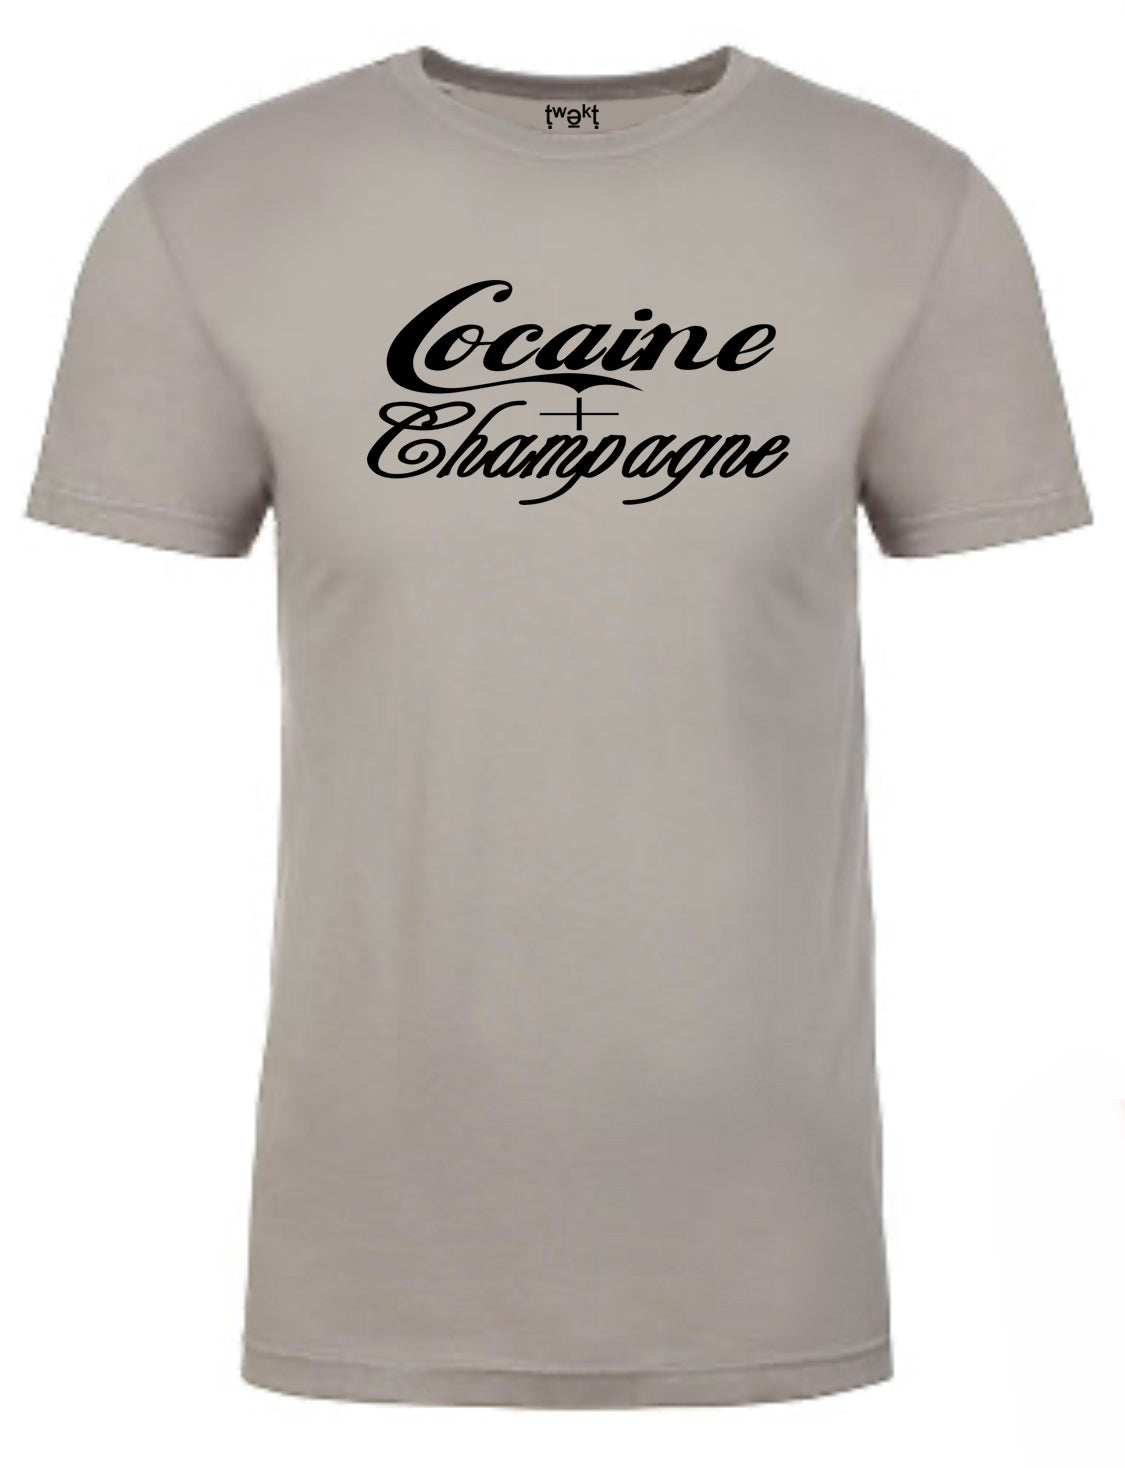 C & C Men T-Shirt